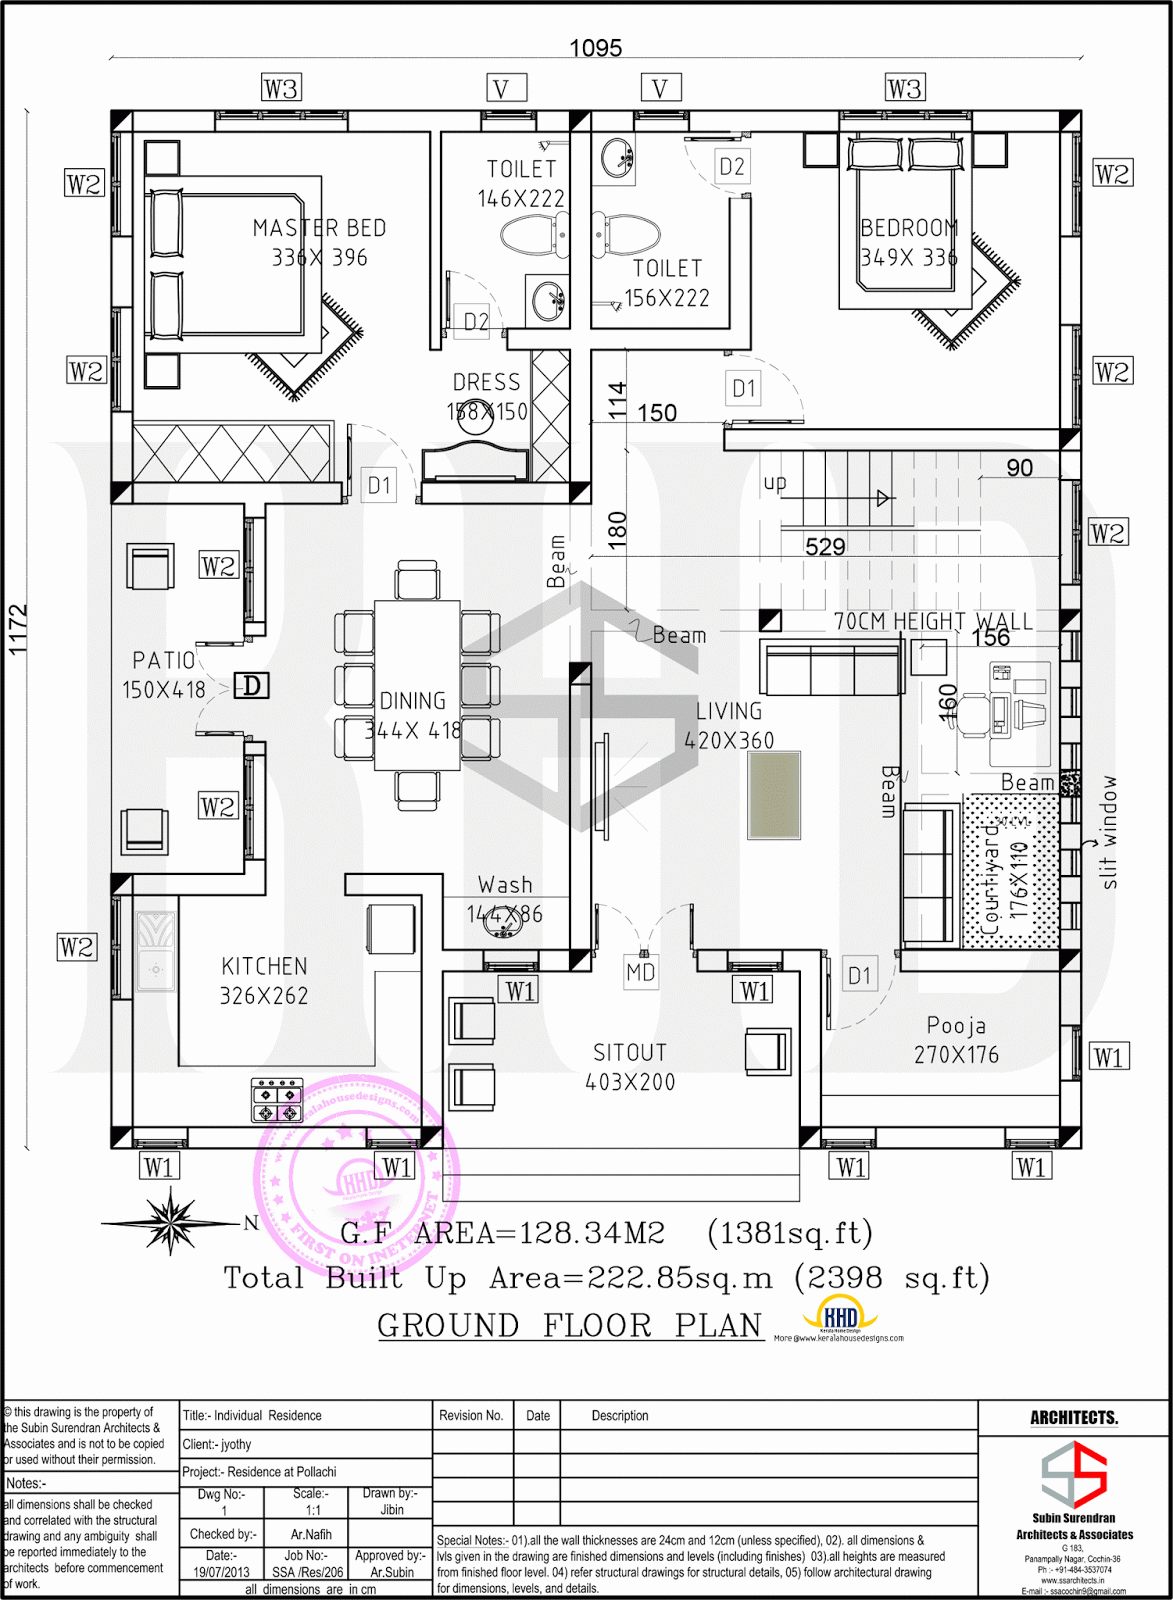 Floor plan and elevation of 2398 sq-ft contemporary villa - Kerala home